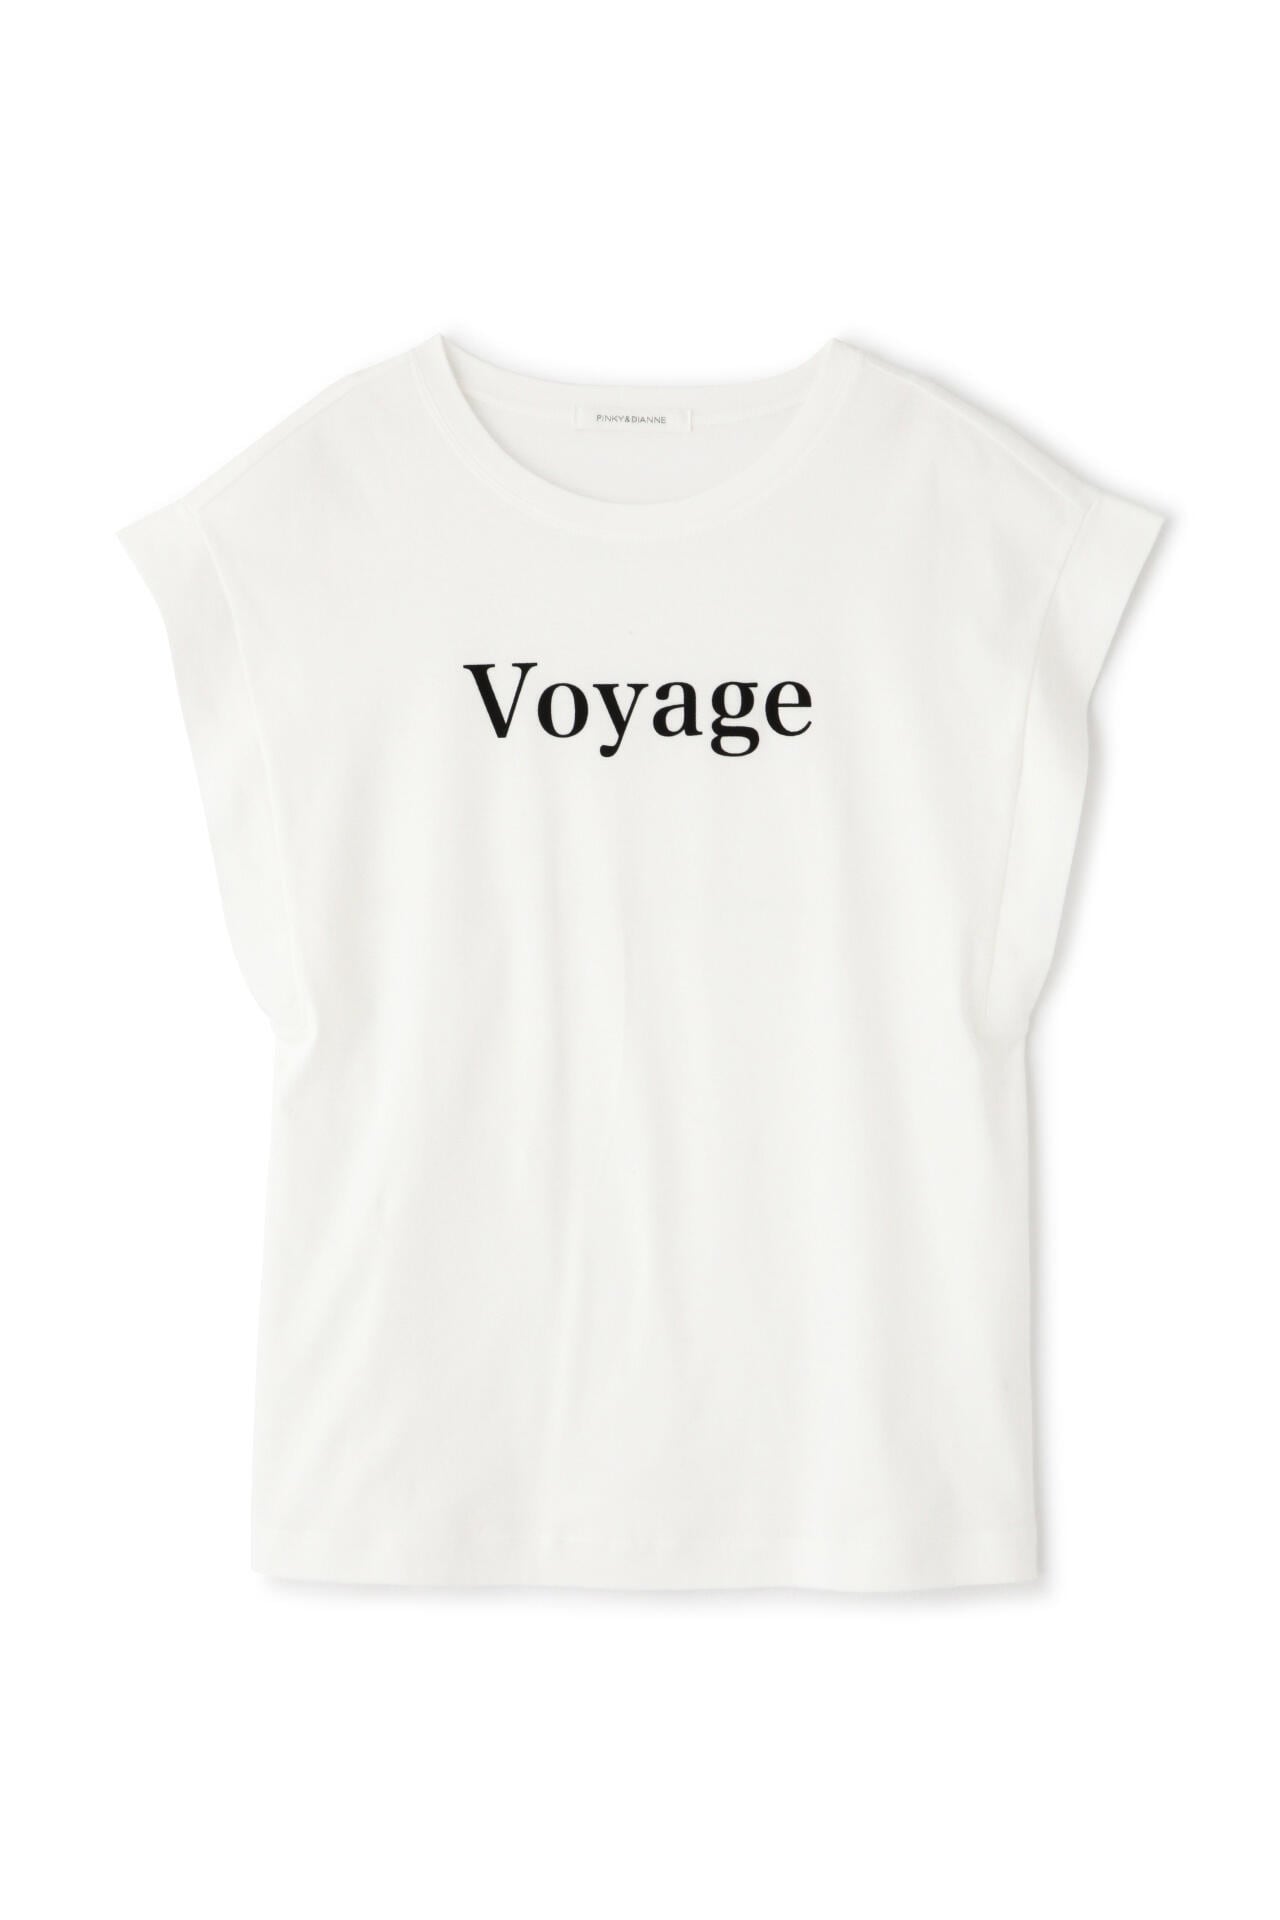 VoyageプリントTシャツ | TOKYOSTYLE